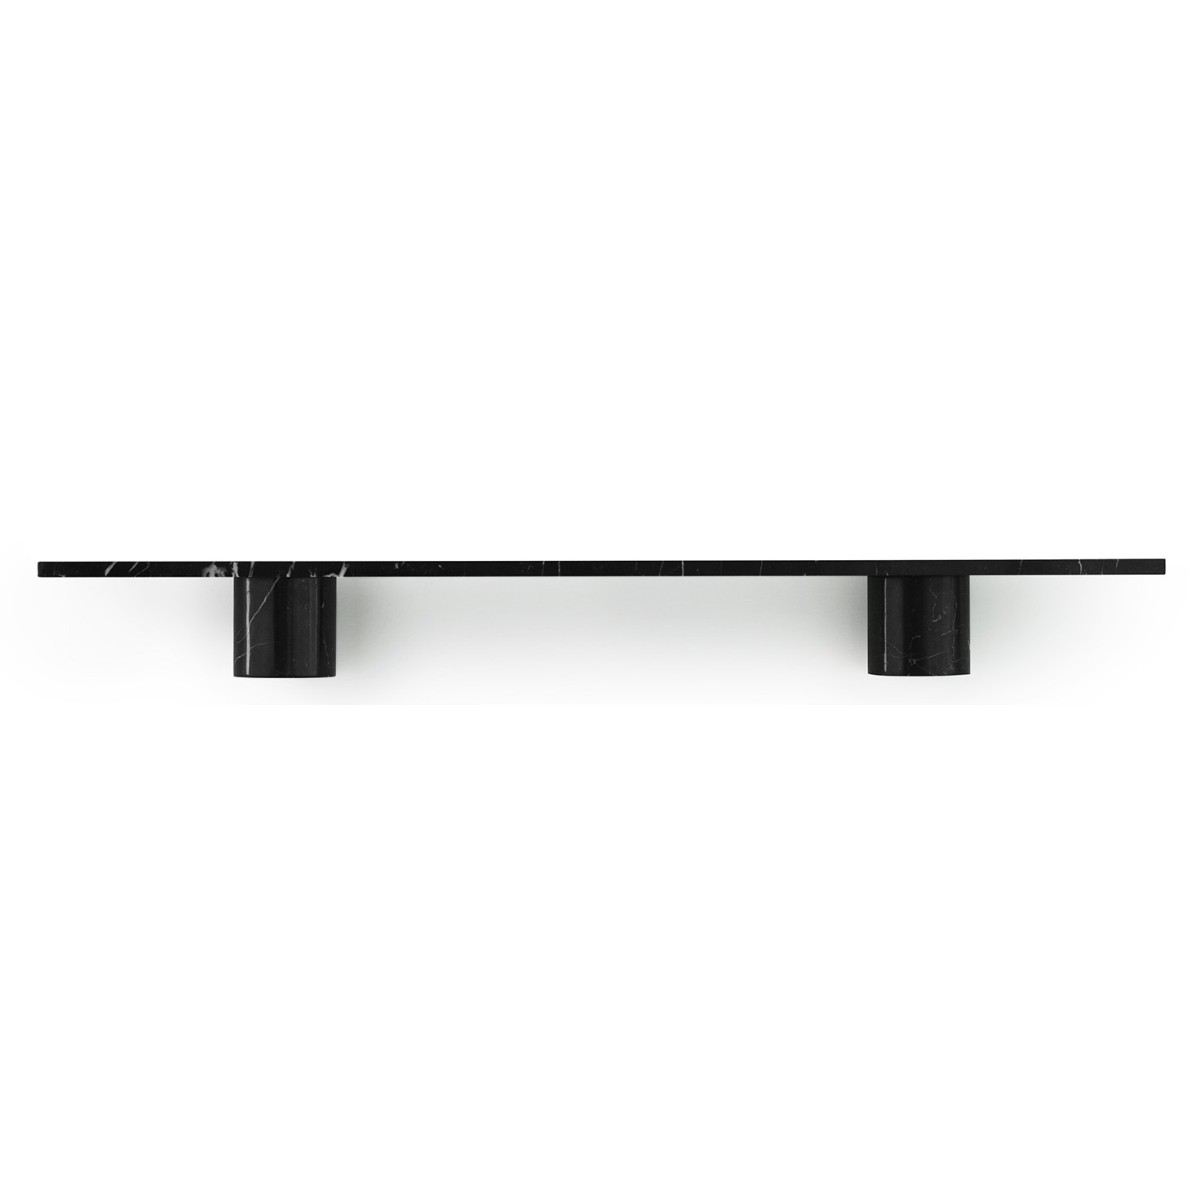 120cm - black marble - Sten shelf